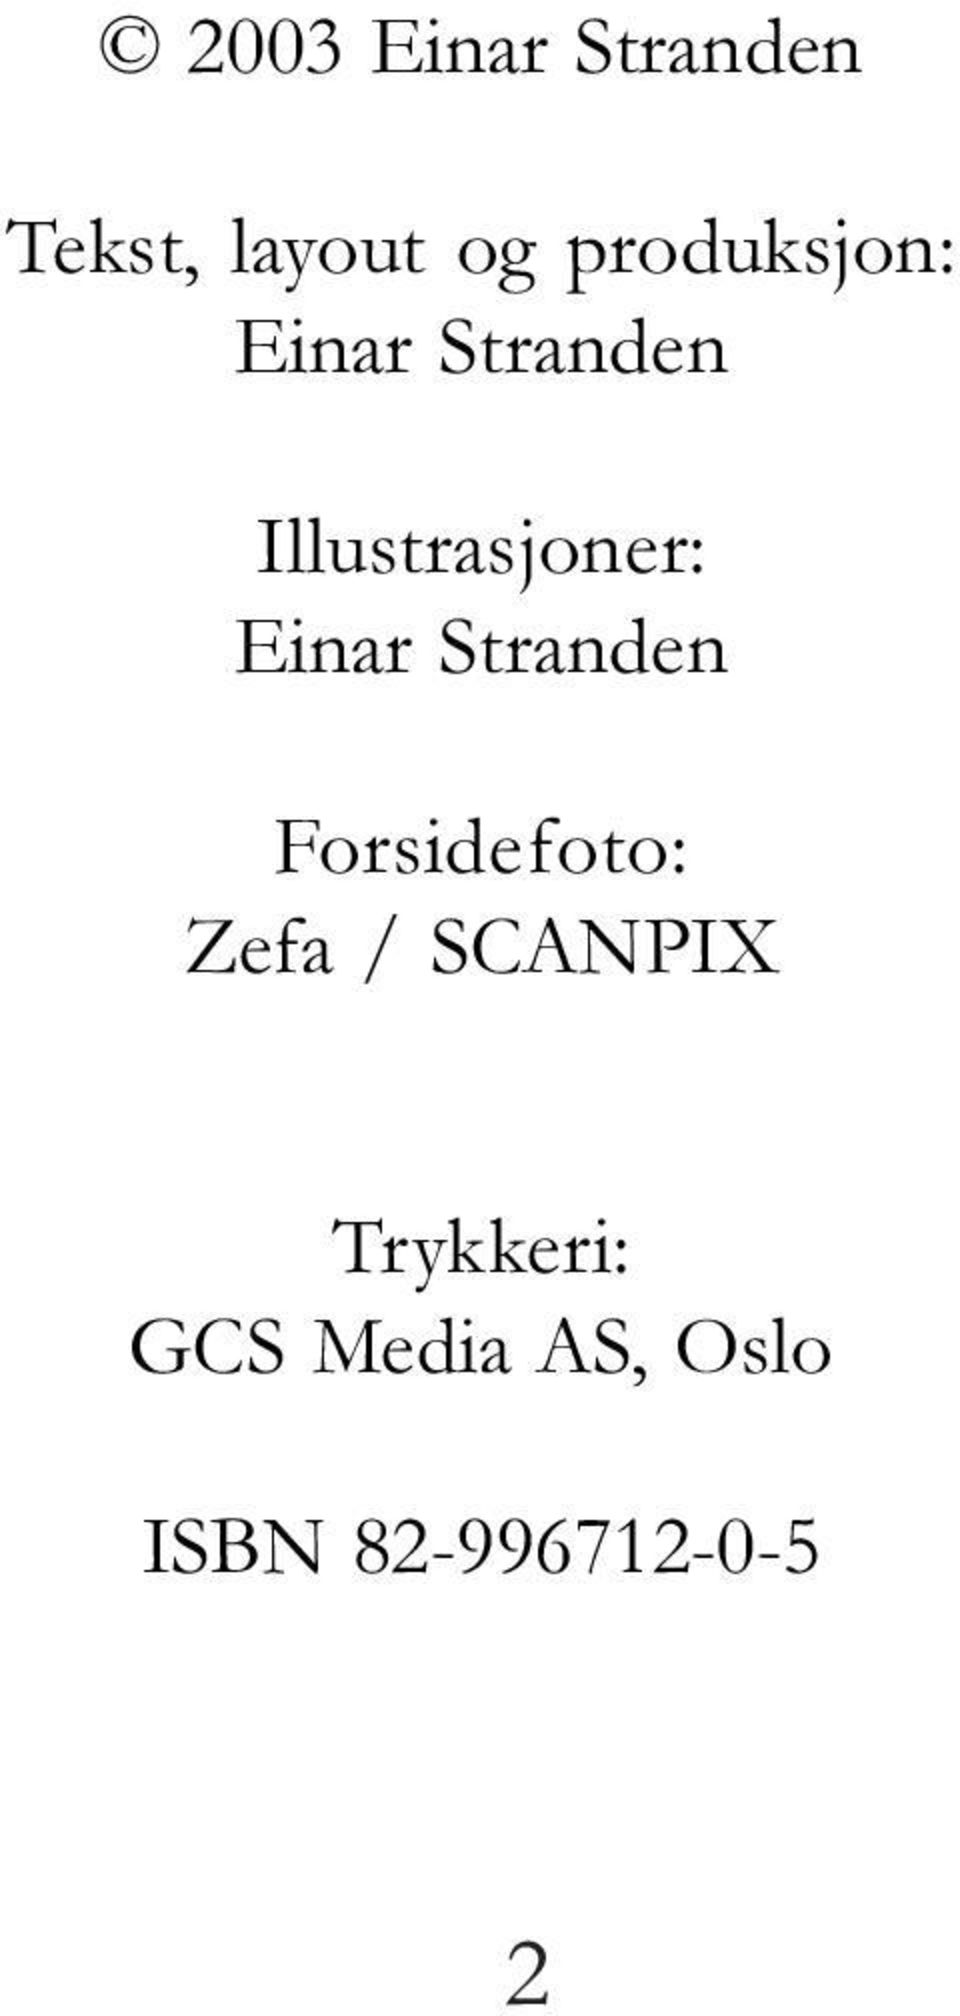 Einar Stranden Forsidefoto: Zefa / SCANPIX